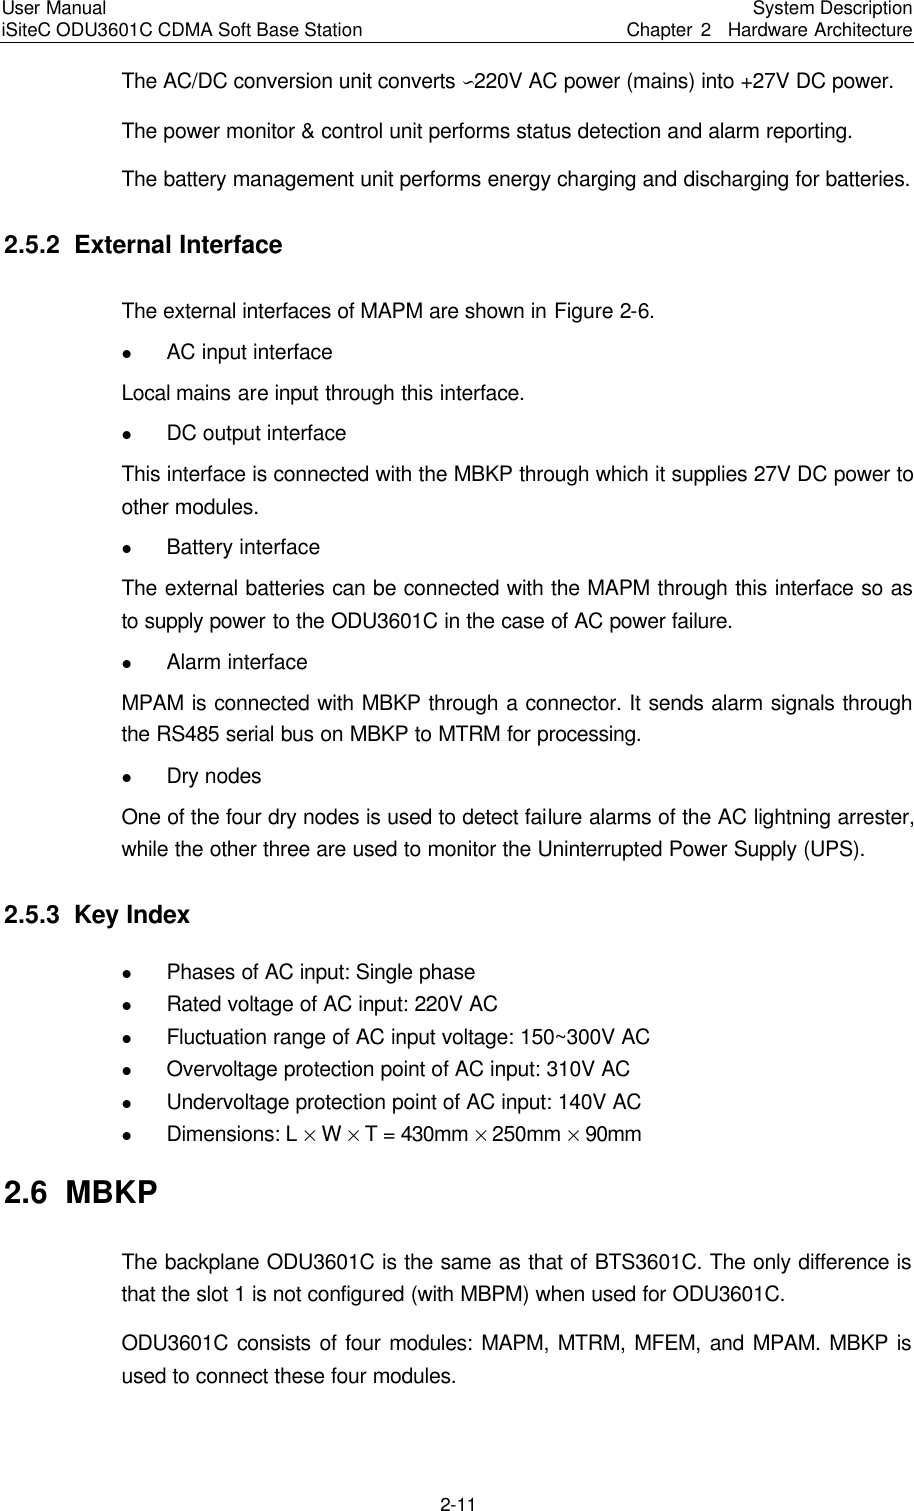 Page 27 of Huawei Technologies ODU3601C-800 CDMA Base Station User Manual 2